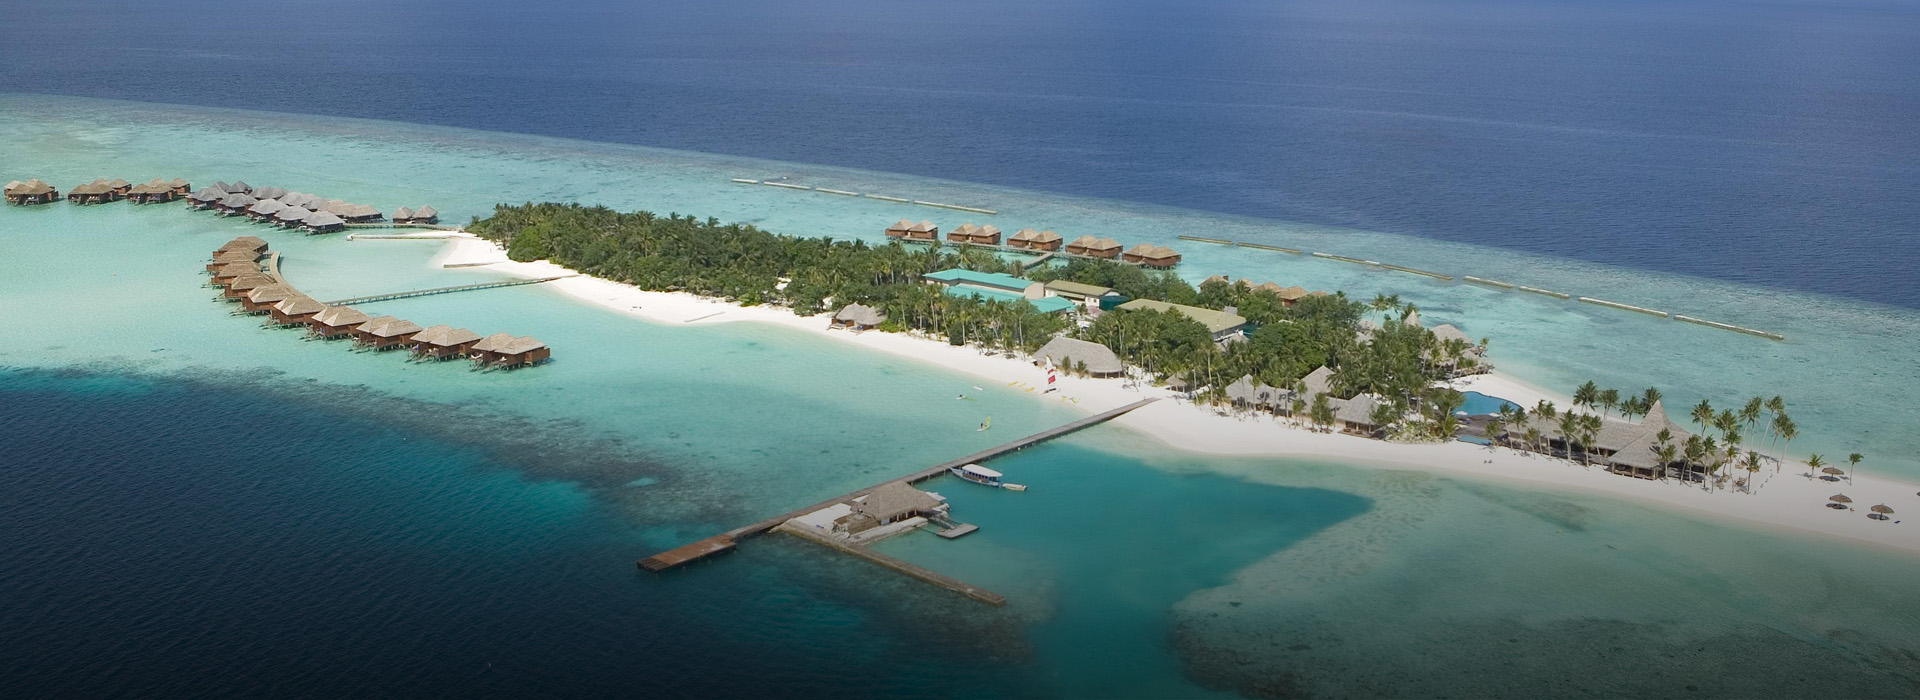 Veligandu Island Resort & Spa Maldives tour package with Jacuzzi Beach Villas